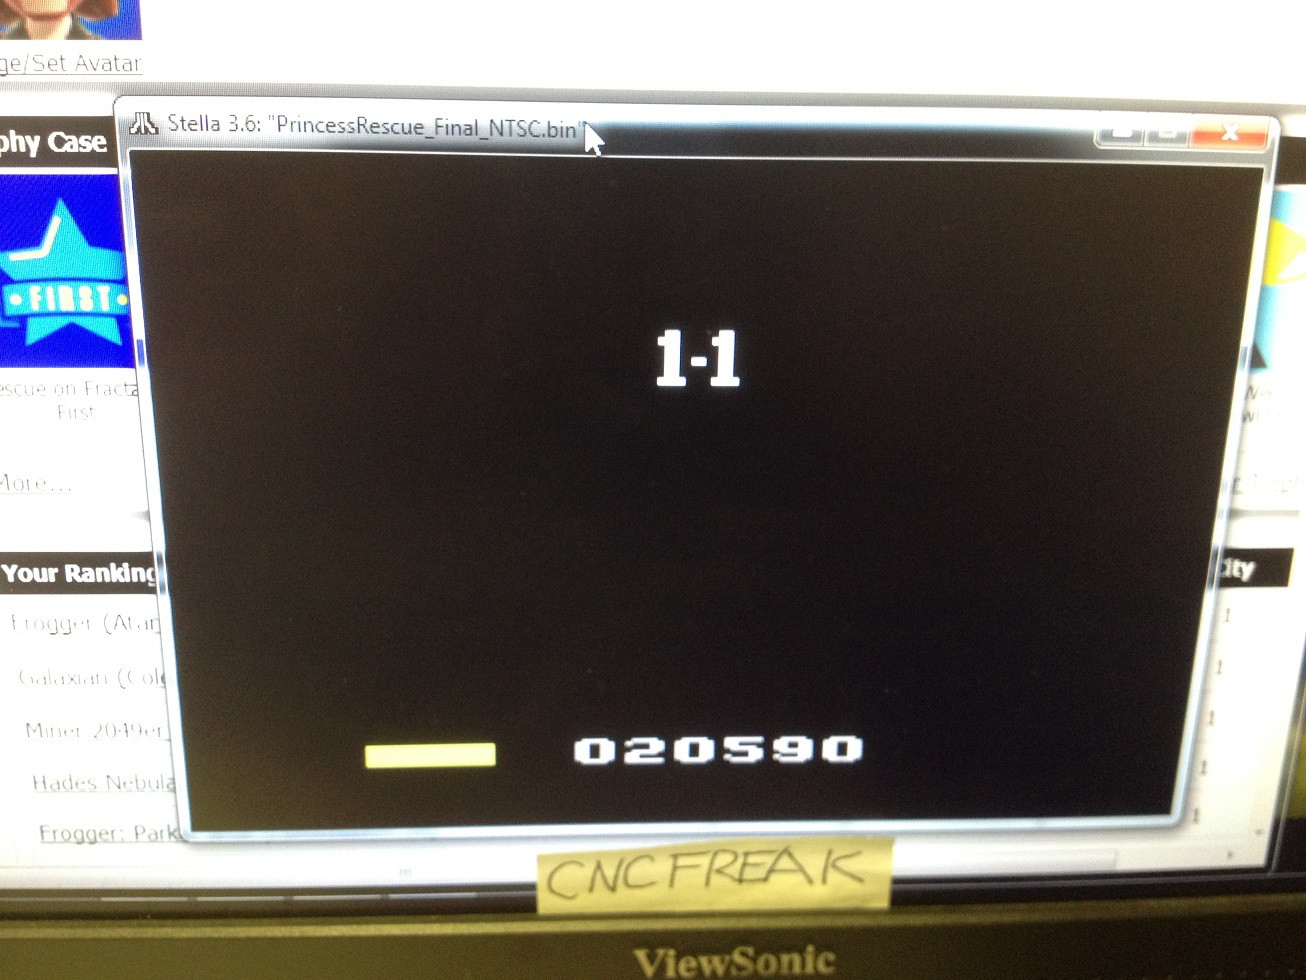 cncfreak: Princess Rescue (Atari 2600 Emulated Novice/B Mode) 20,590 points on 2013-10-16 14:29:07